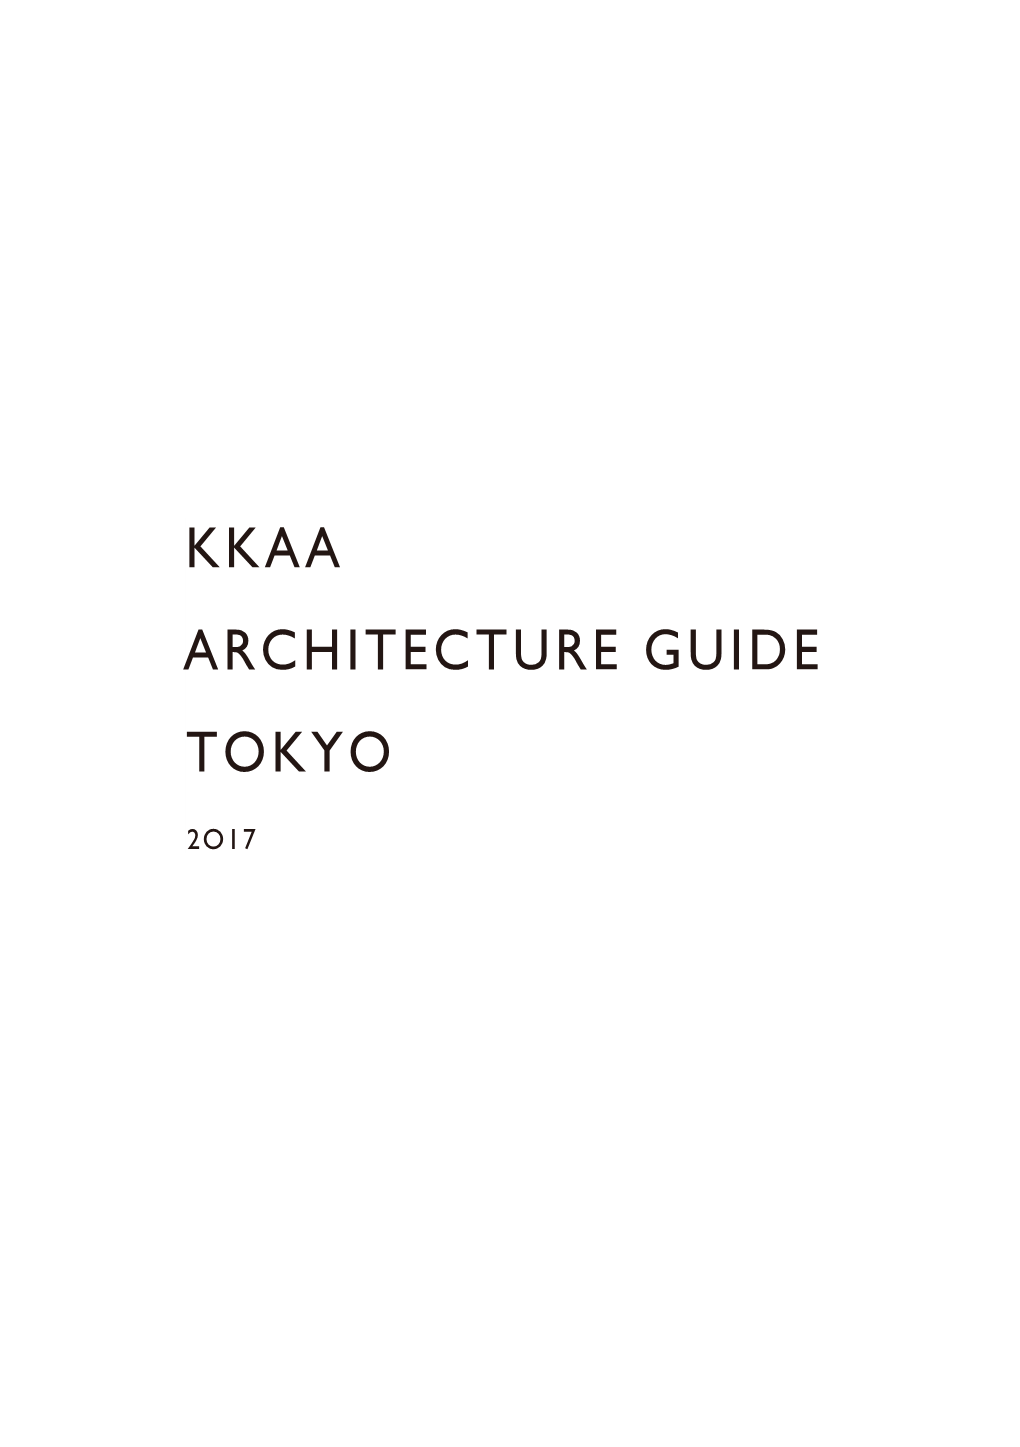 Kkaa Architecture Guide Tokyo